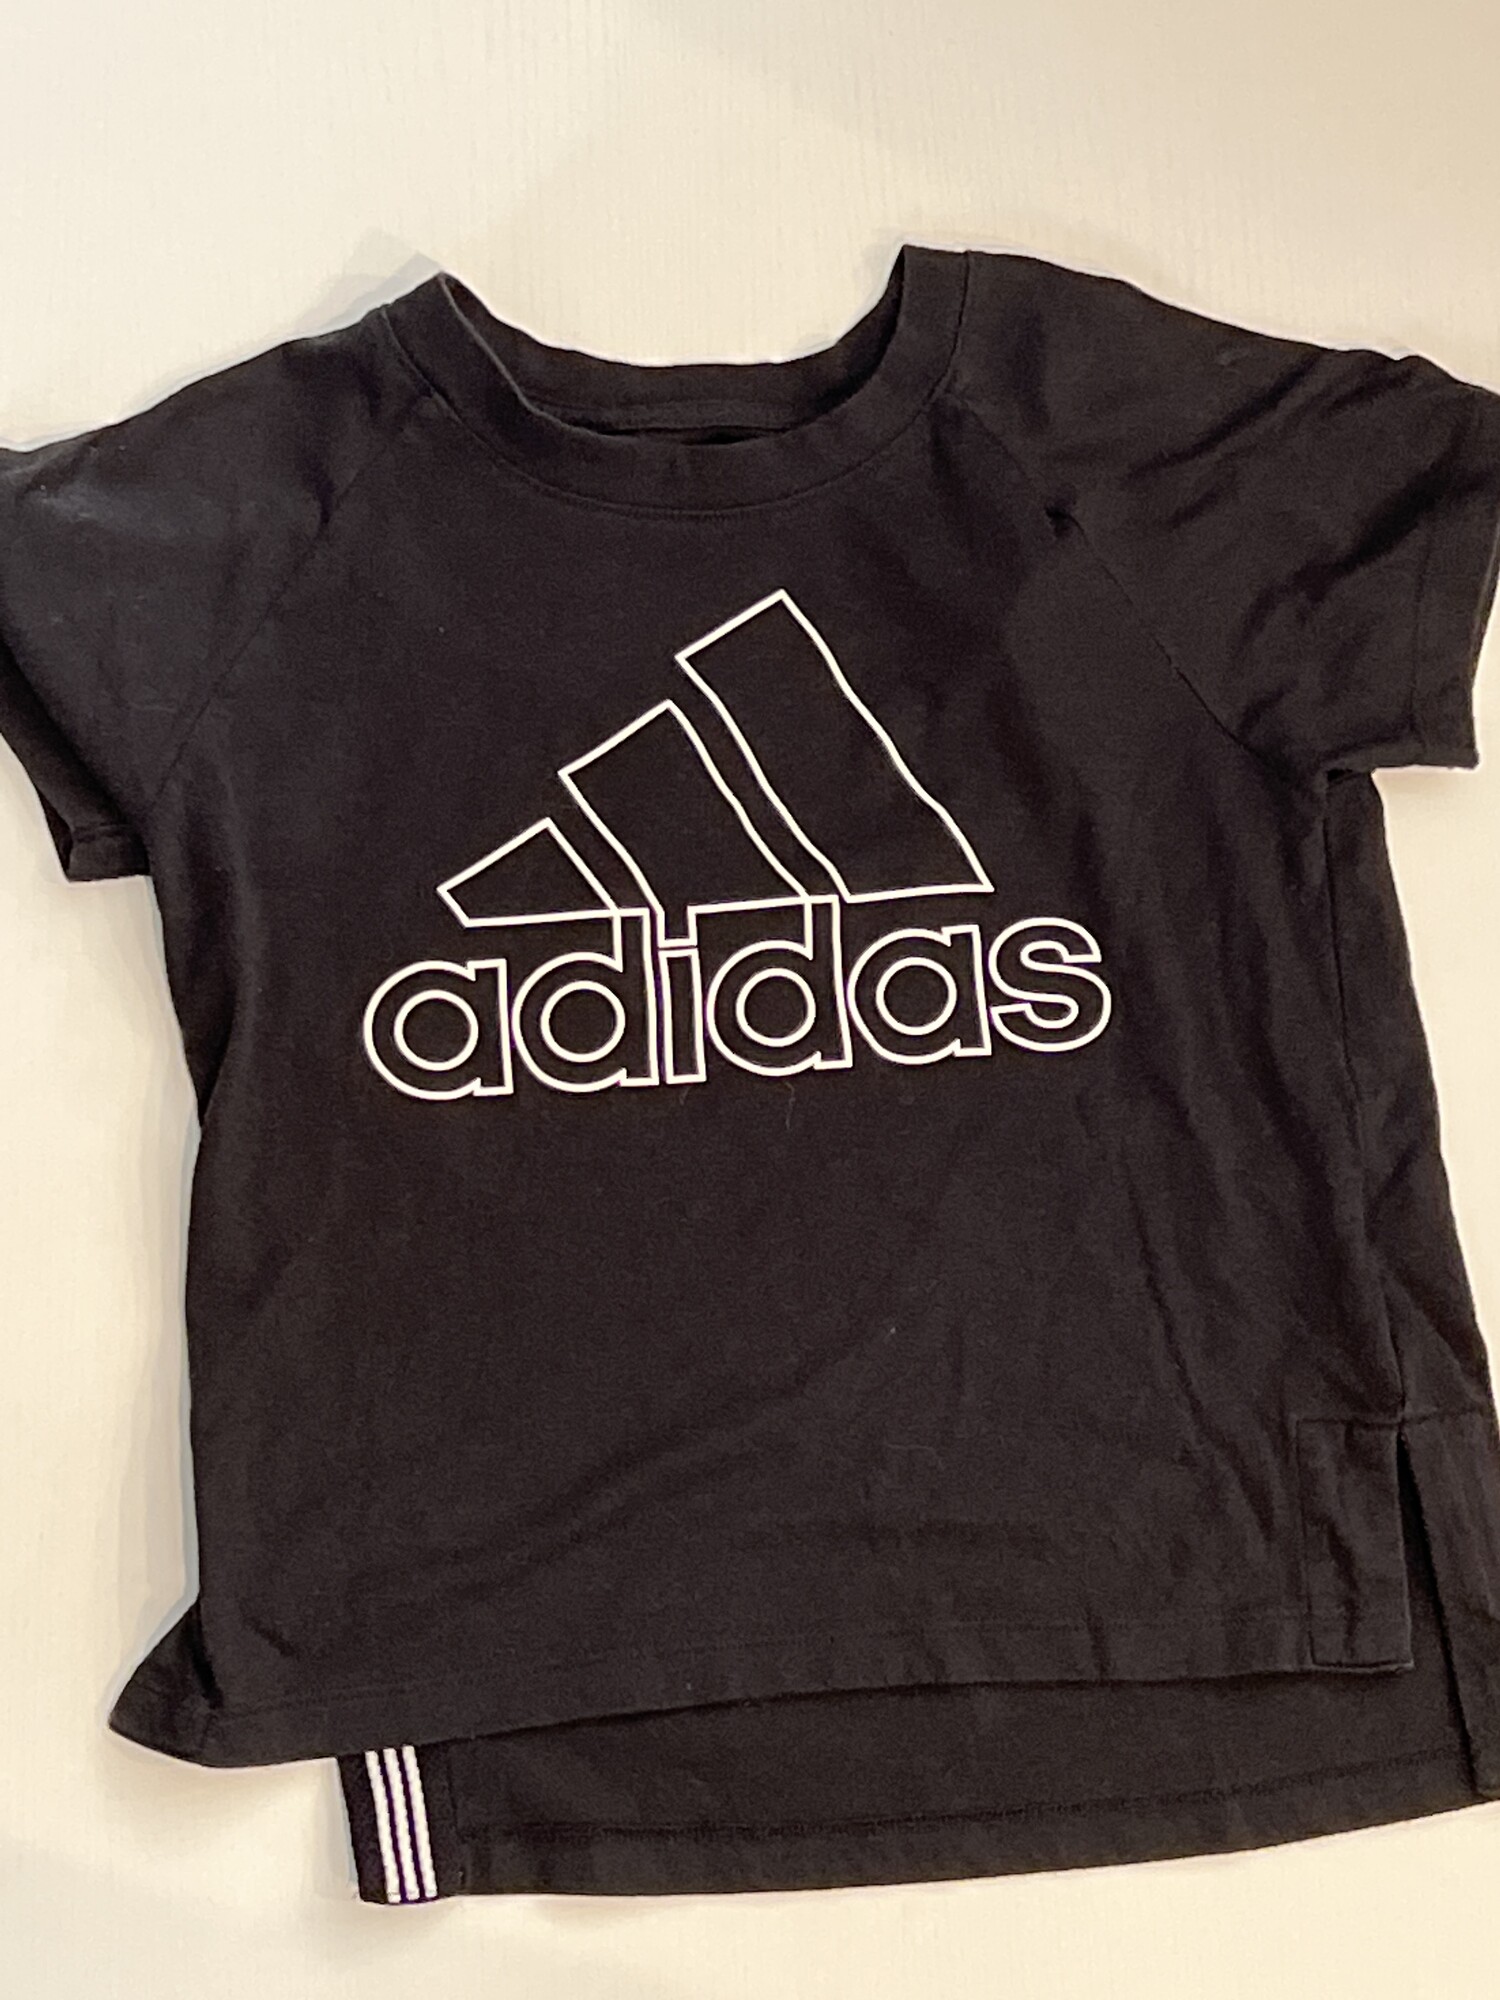 Adidas, Black, Size: 7/8